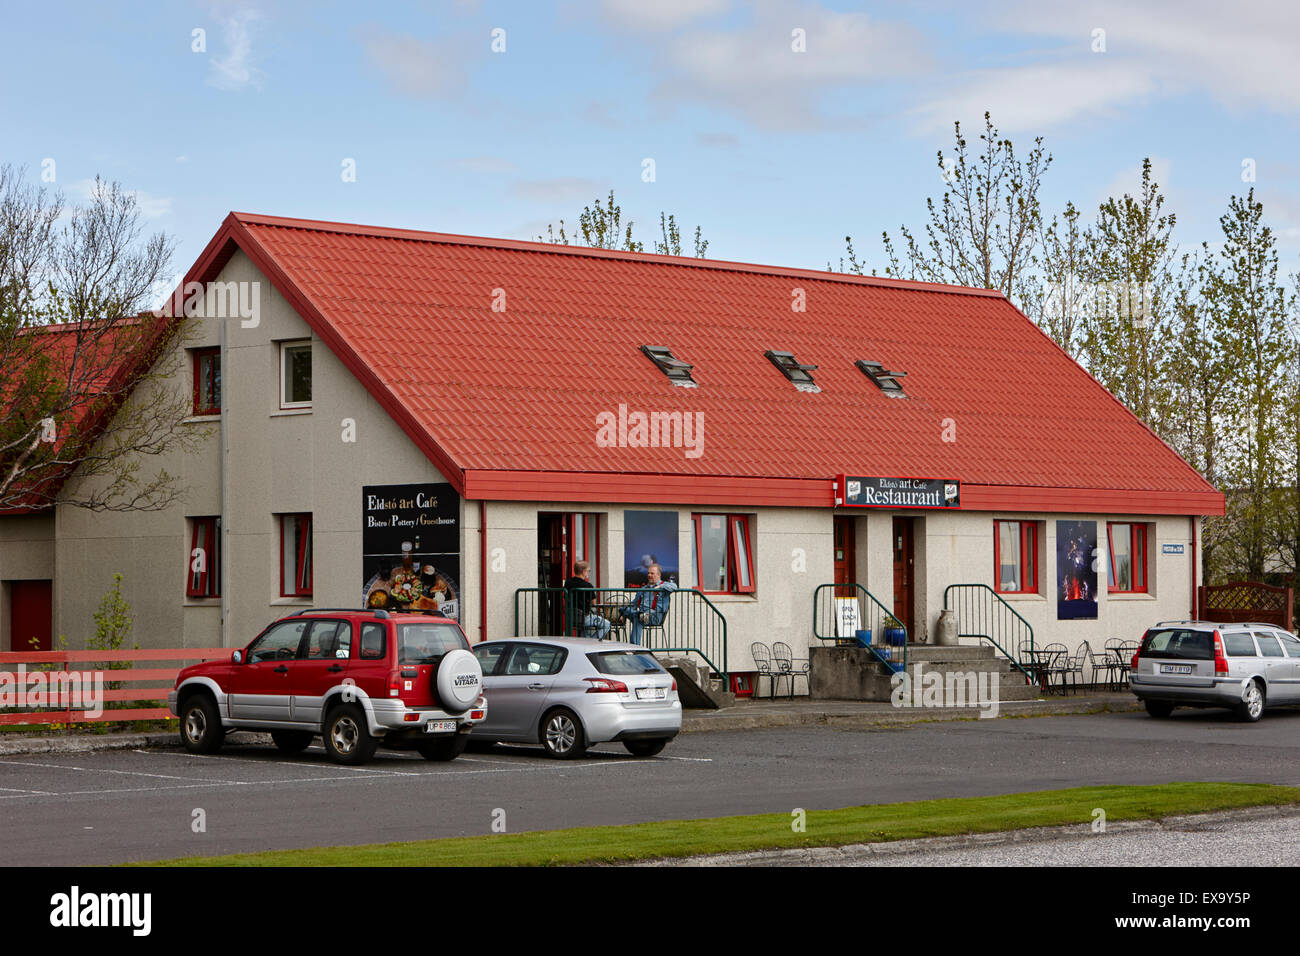 eldsto art cafe and bistro roadside restaurant on route 1 in hvolsvollur Iceland Stock Photo